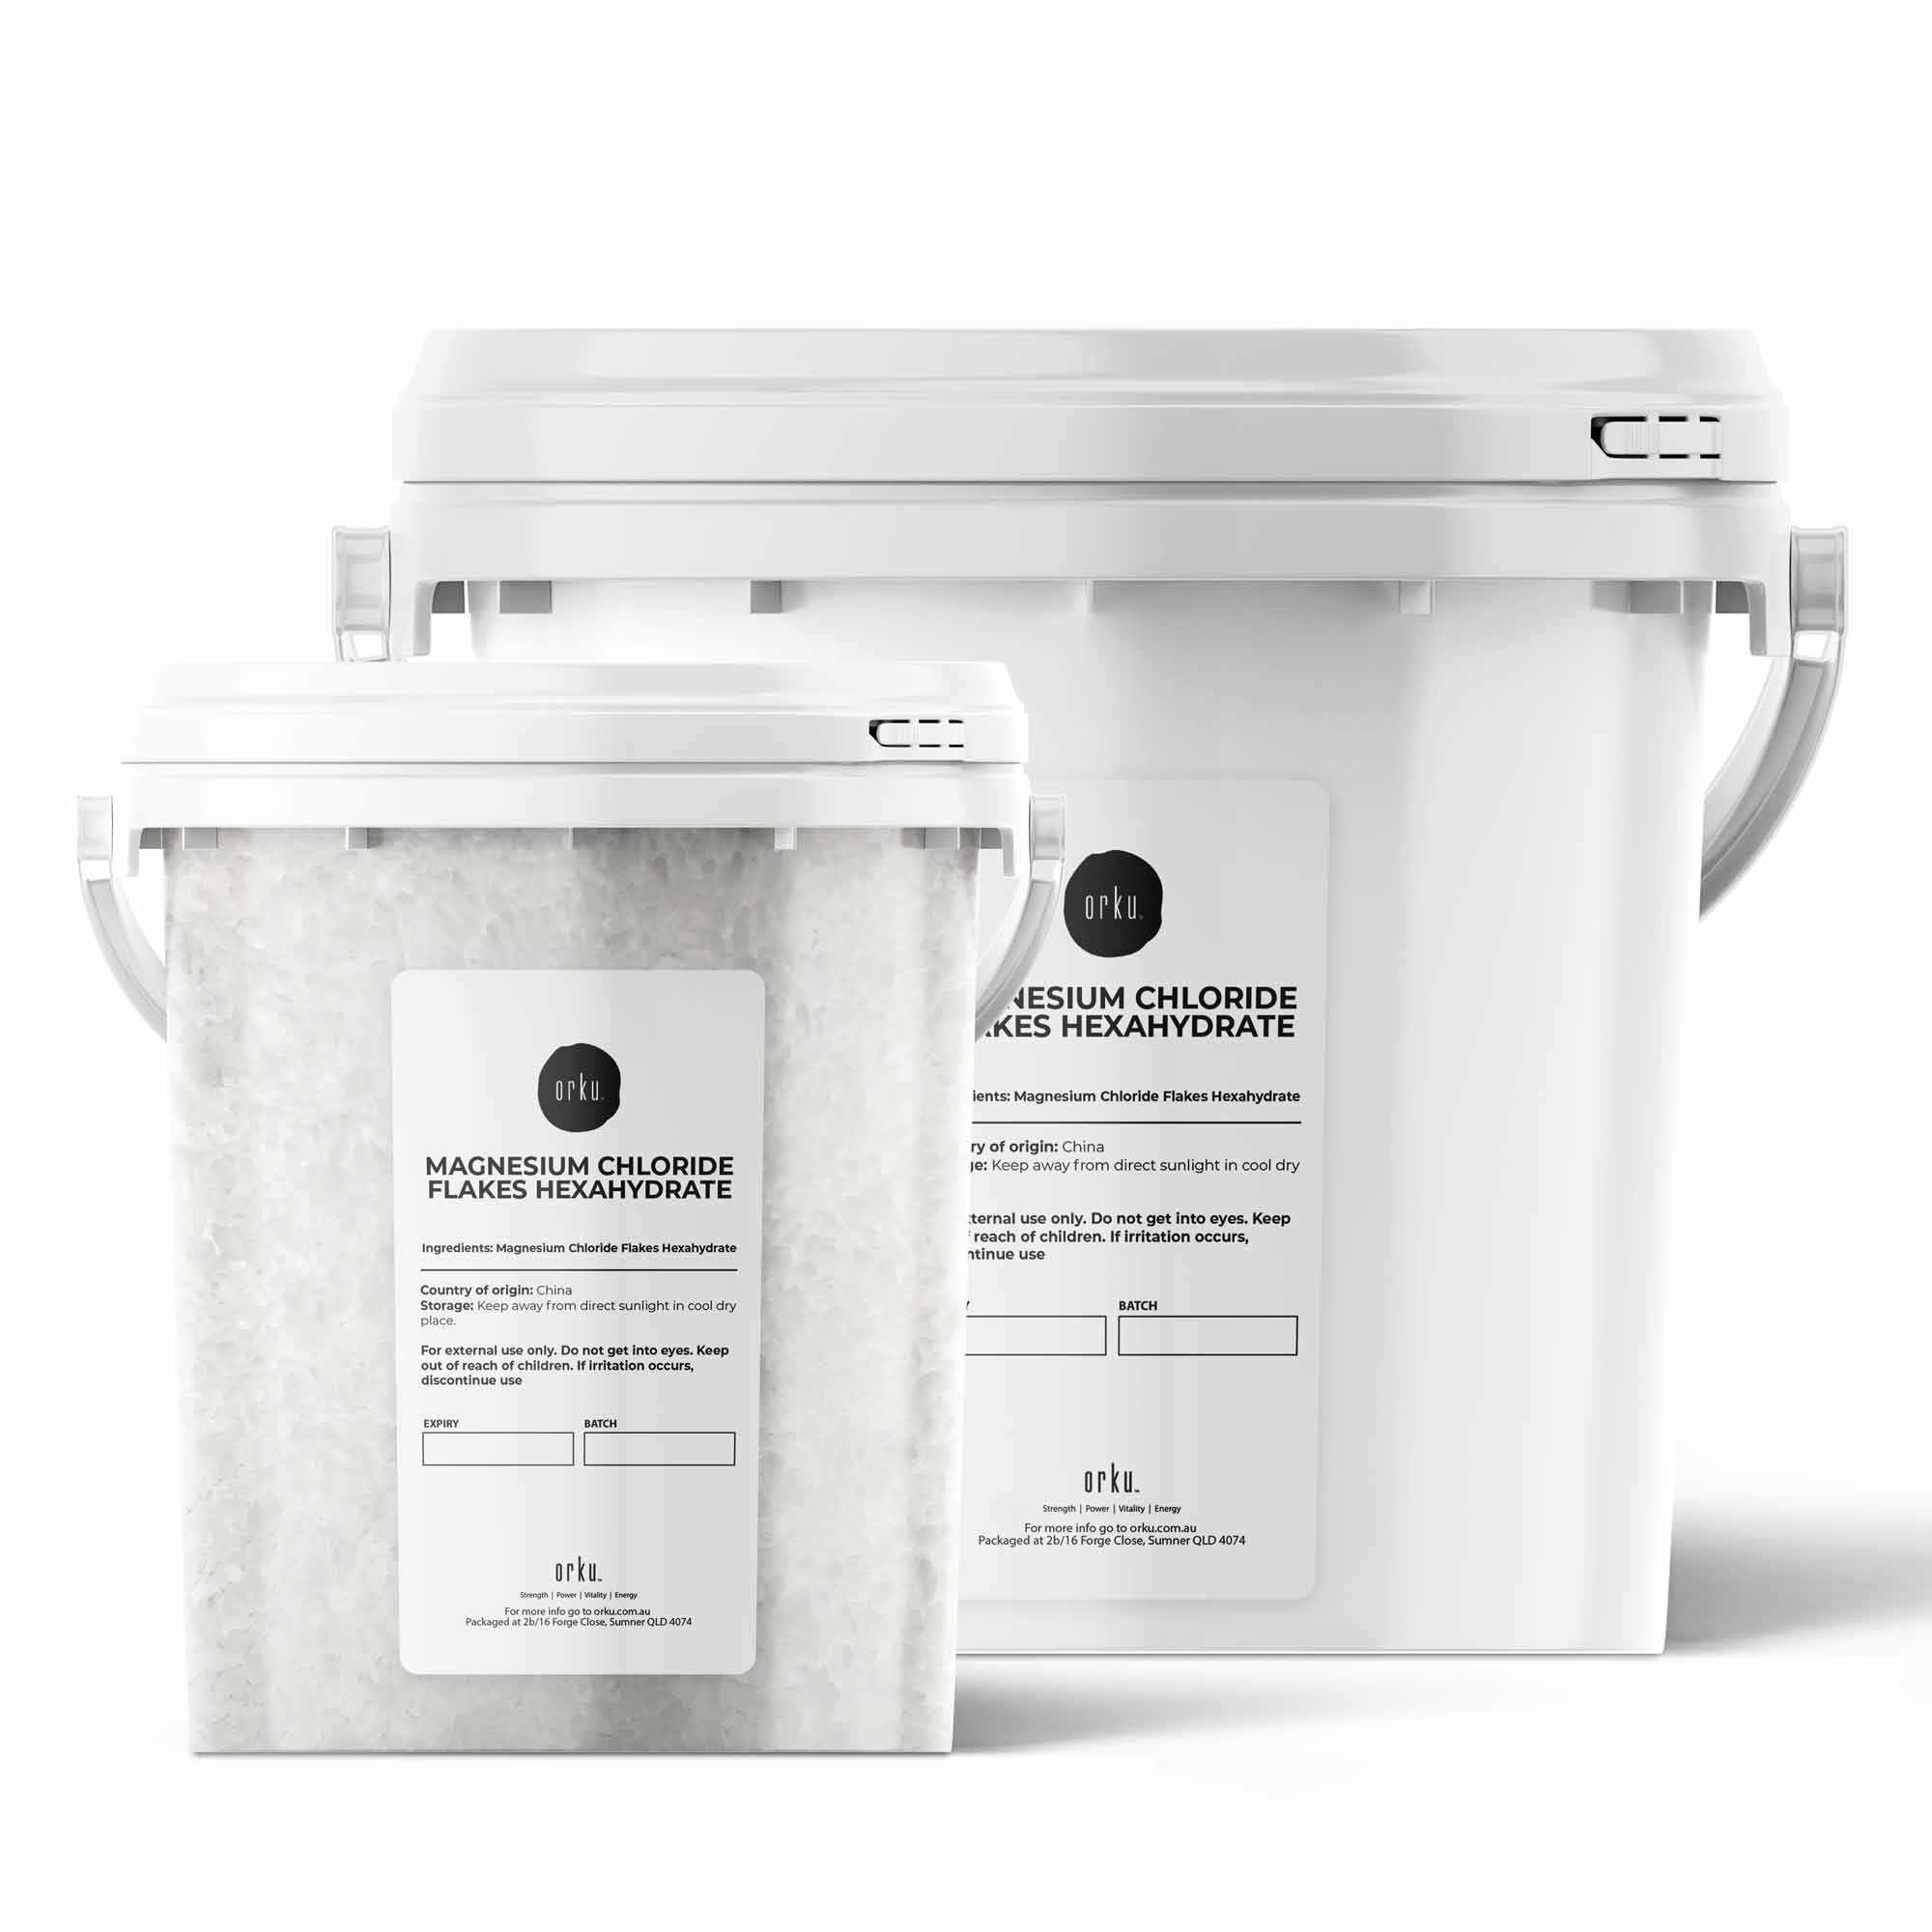 Magnesium Chloride Flakes Hexahydrate Buckets - Organic USP Food Grade Salt